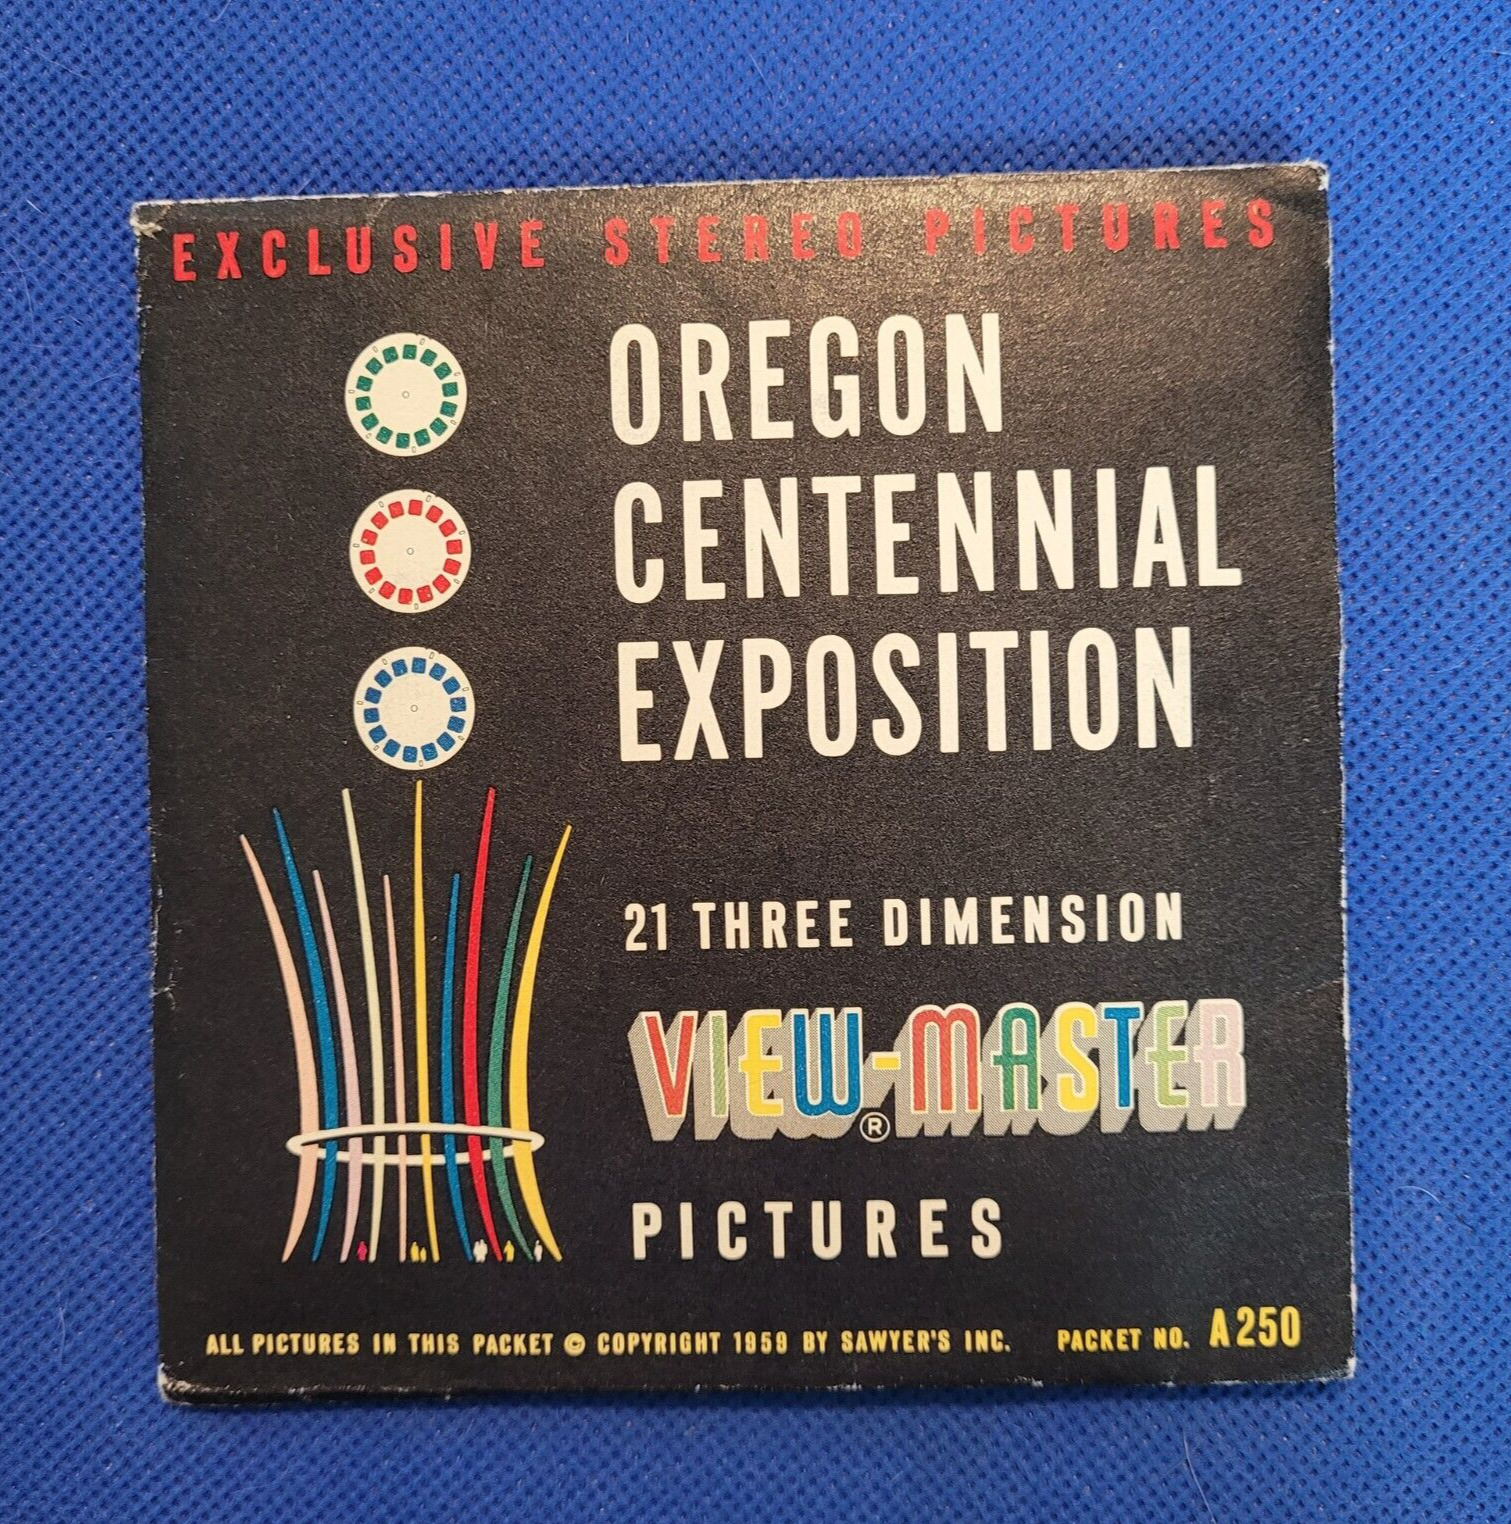 Rare Scarce A250 Sawyer's Oregon Centennial Exposition view-master Reels Packet